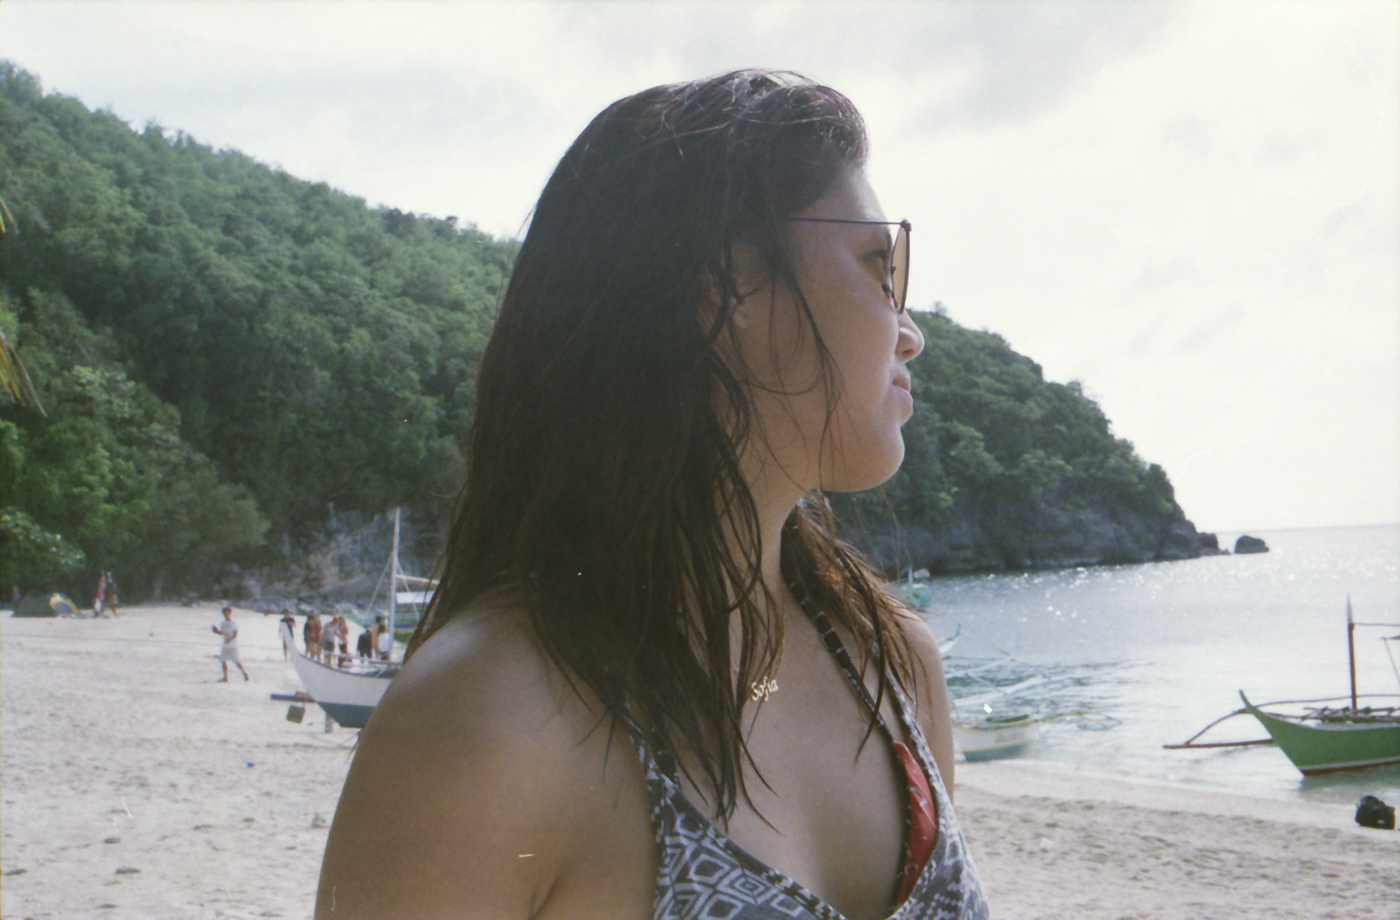 film photography 35mm beach tropics